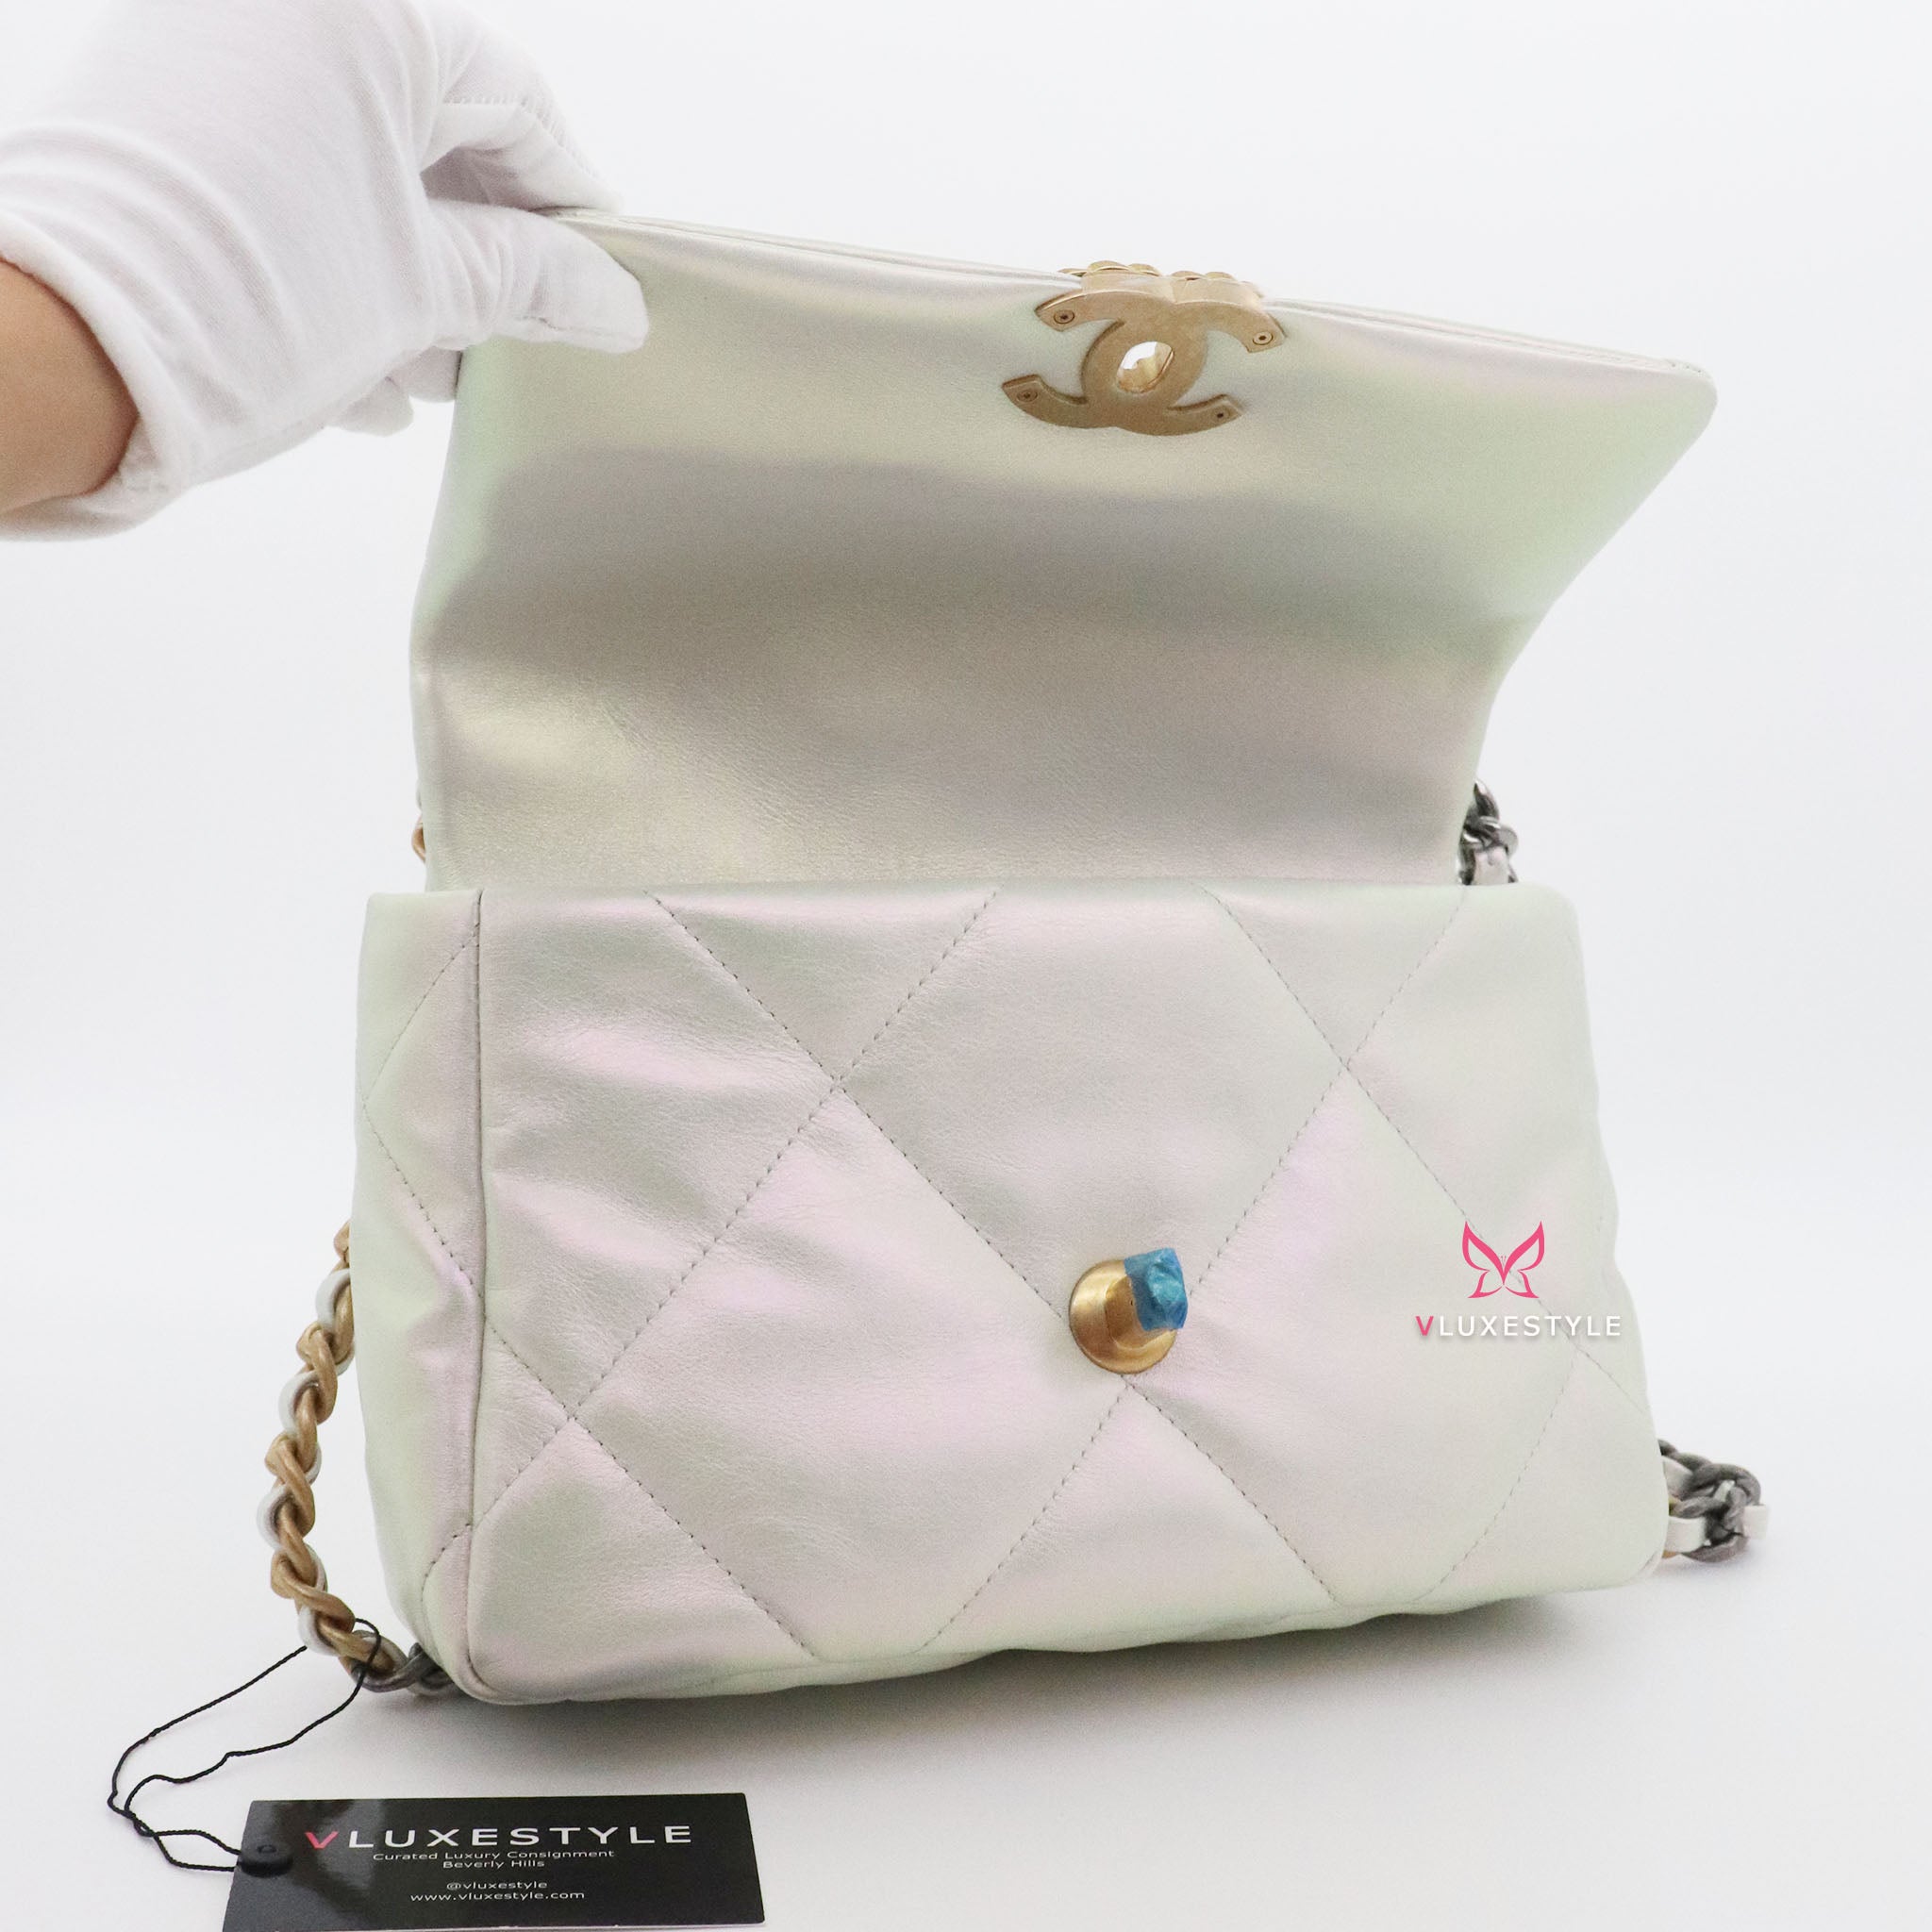 Jelly handbag Chanel White in Plastic - 27596864